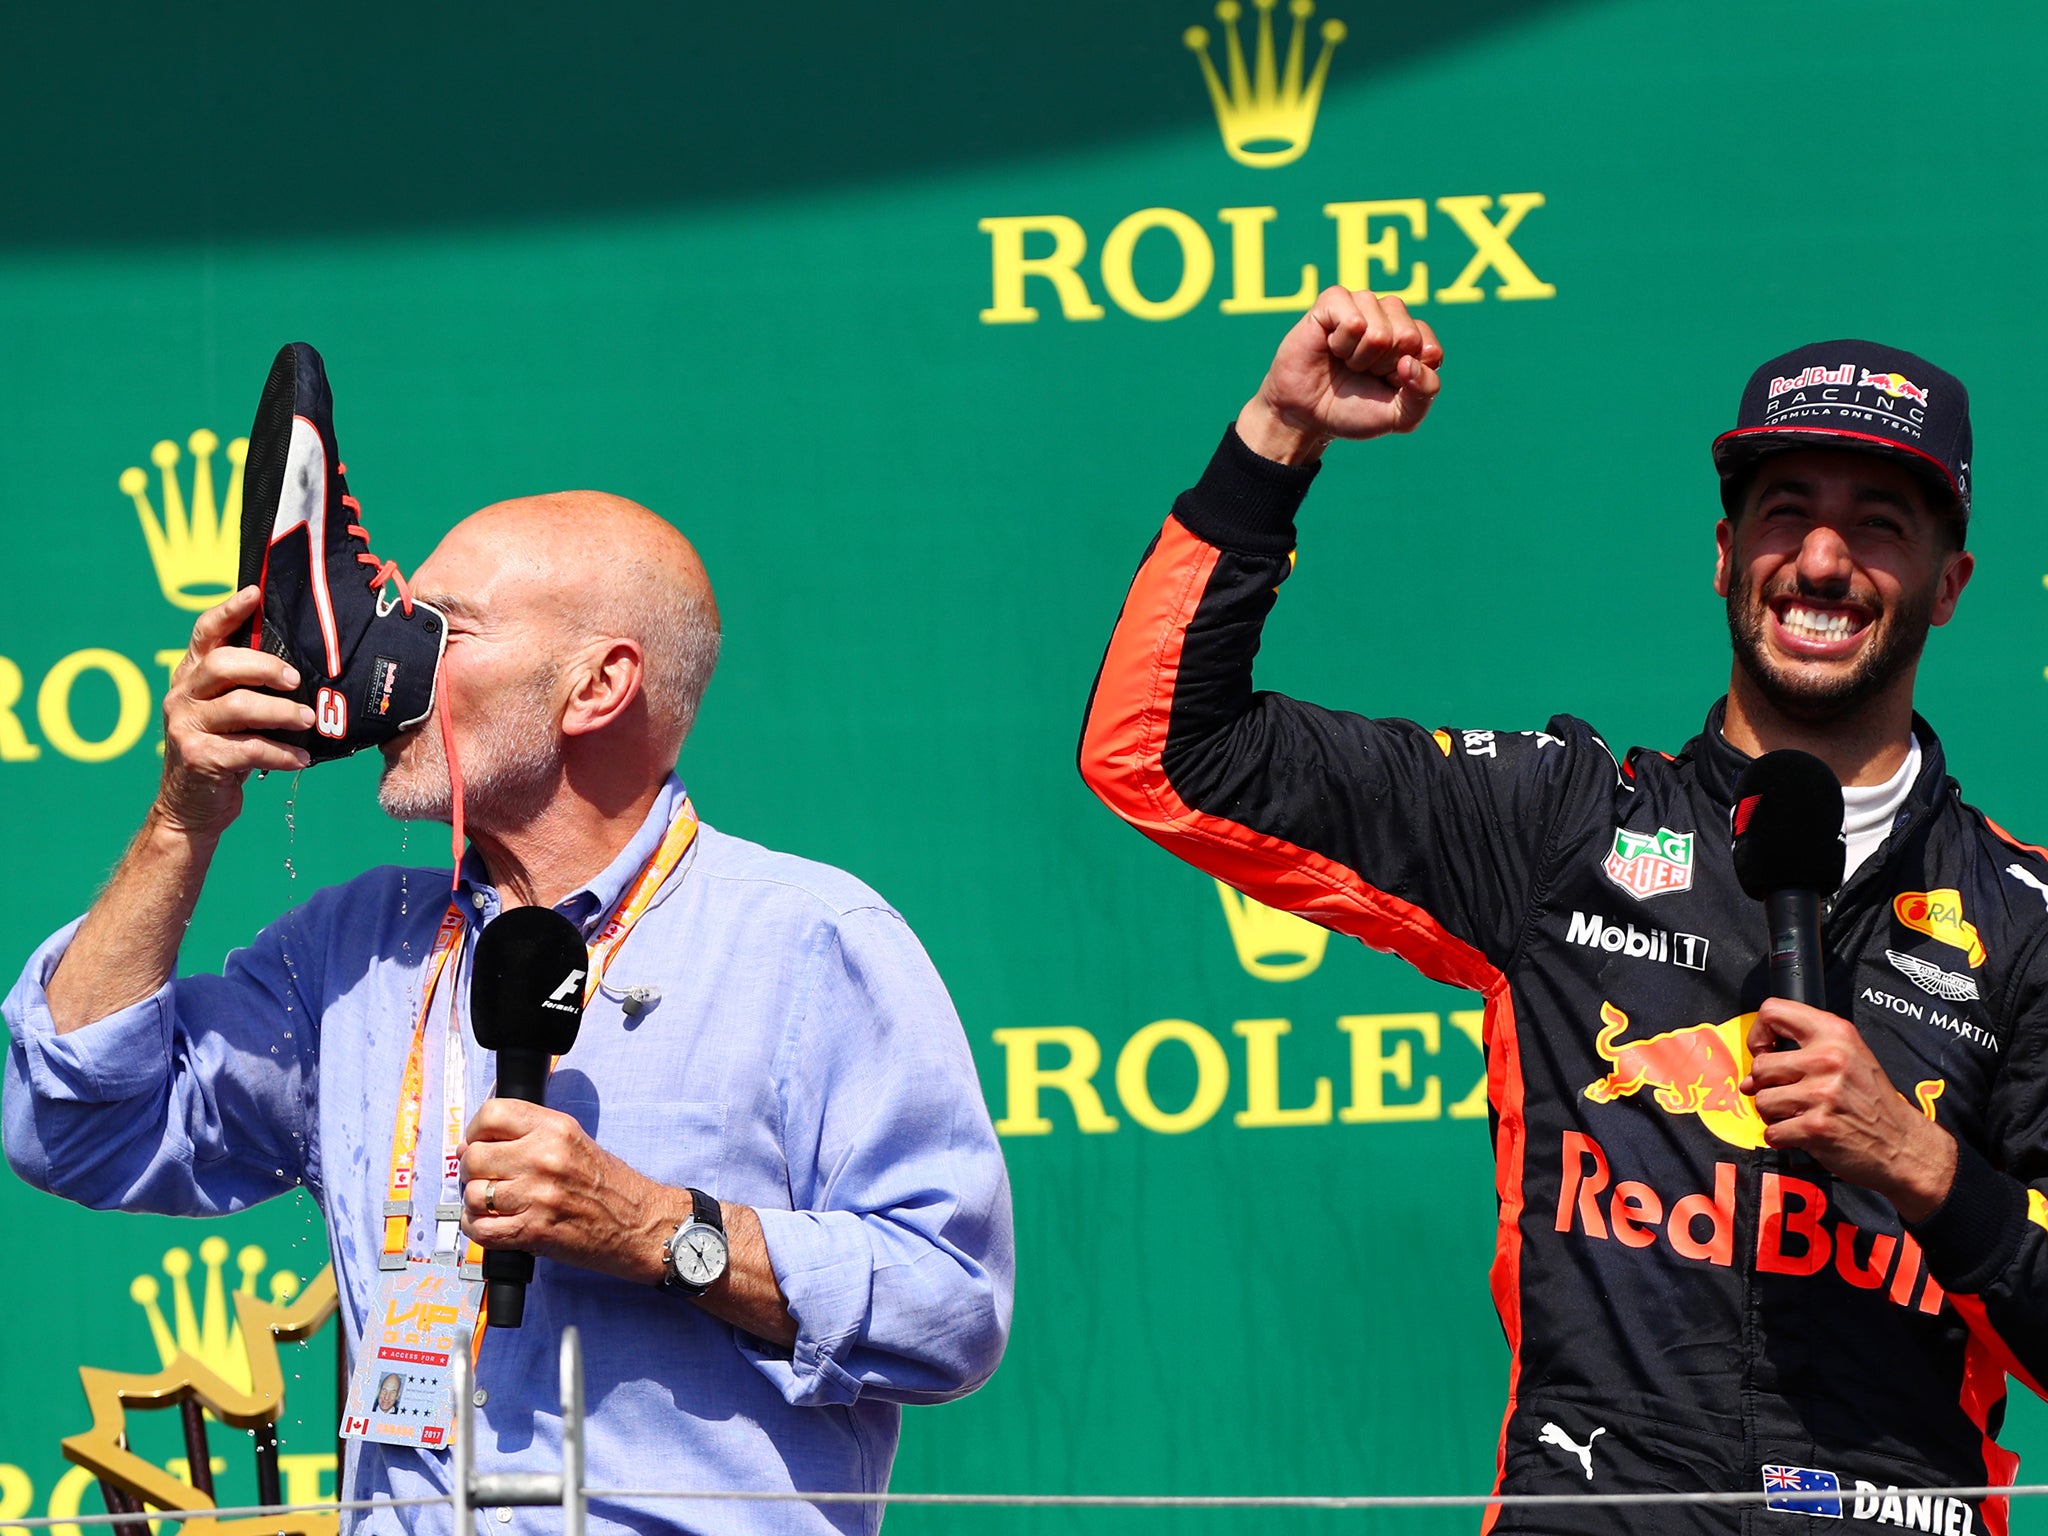 Ricciardo managed to get Sir Patrick Stewart to celebrate with a 'Shoey'